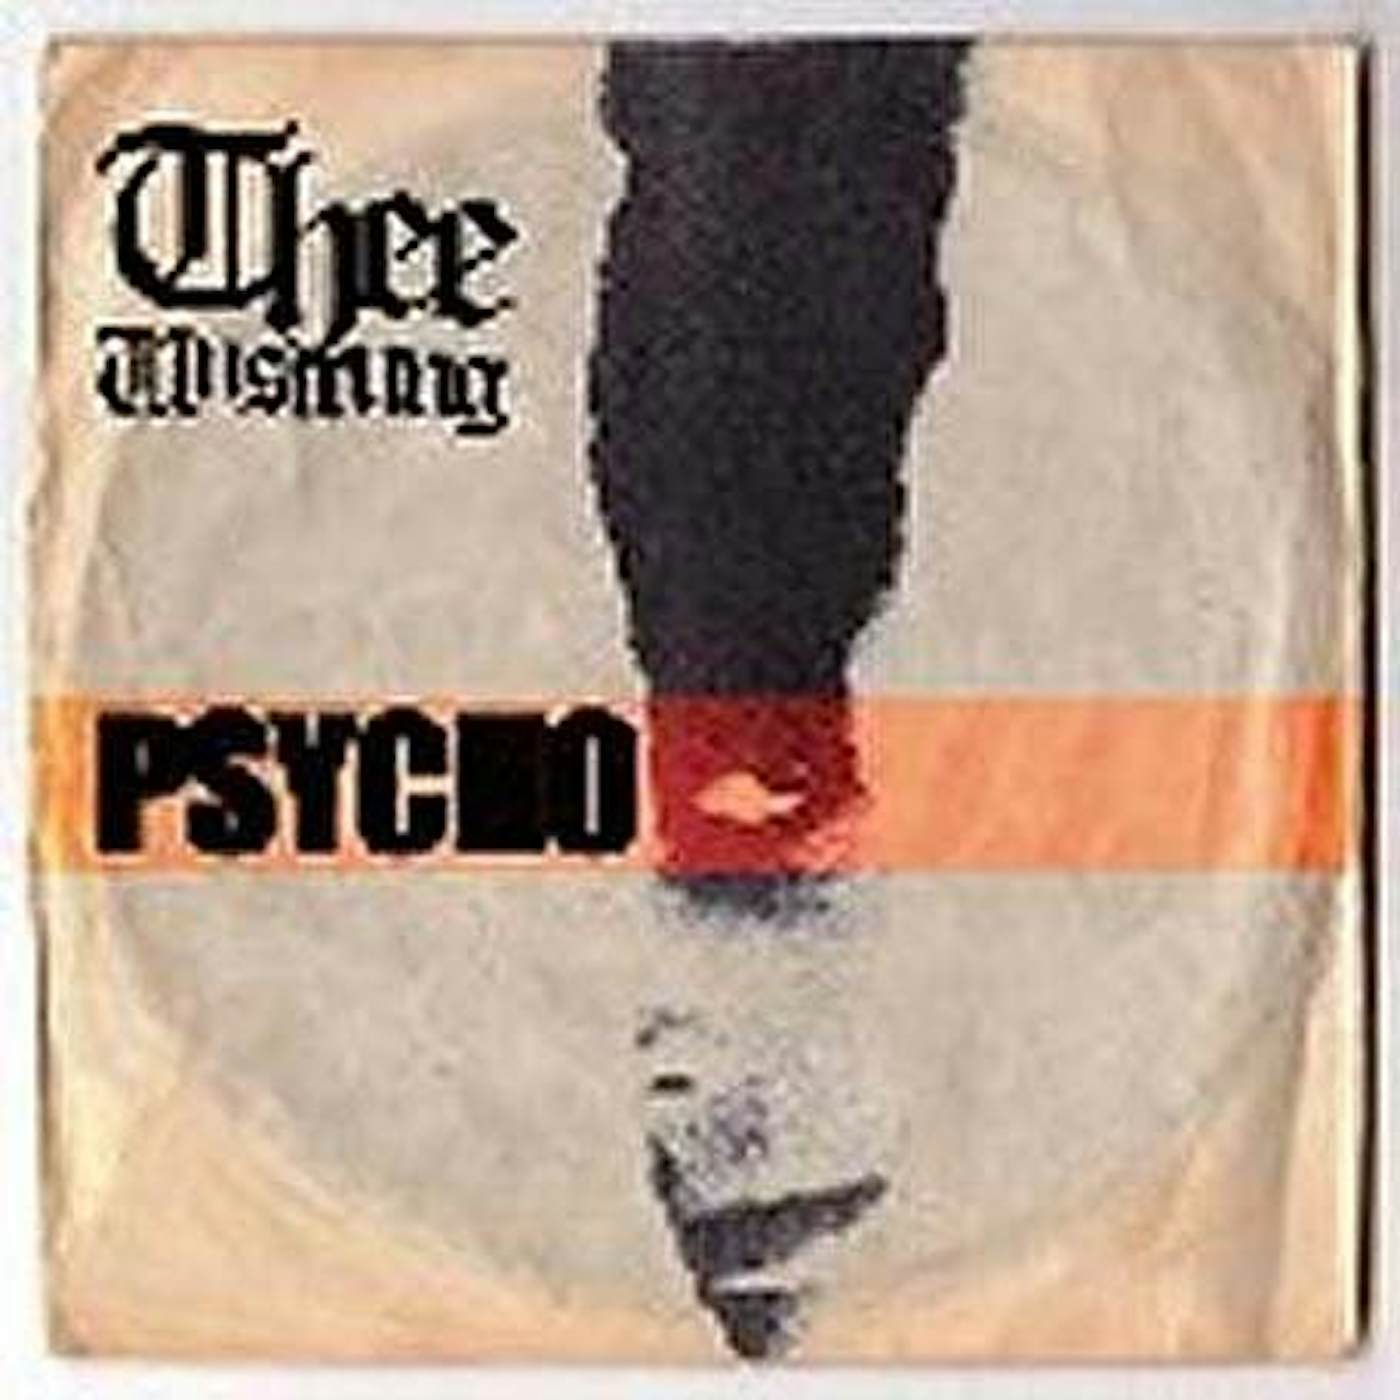 Thee Unstrung PSYCHO PT. 2 Vinyl Record